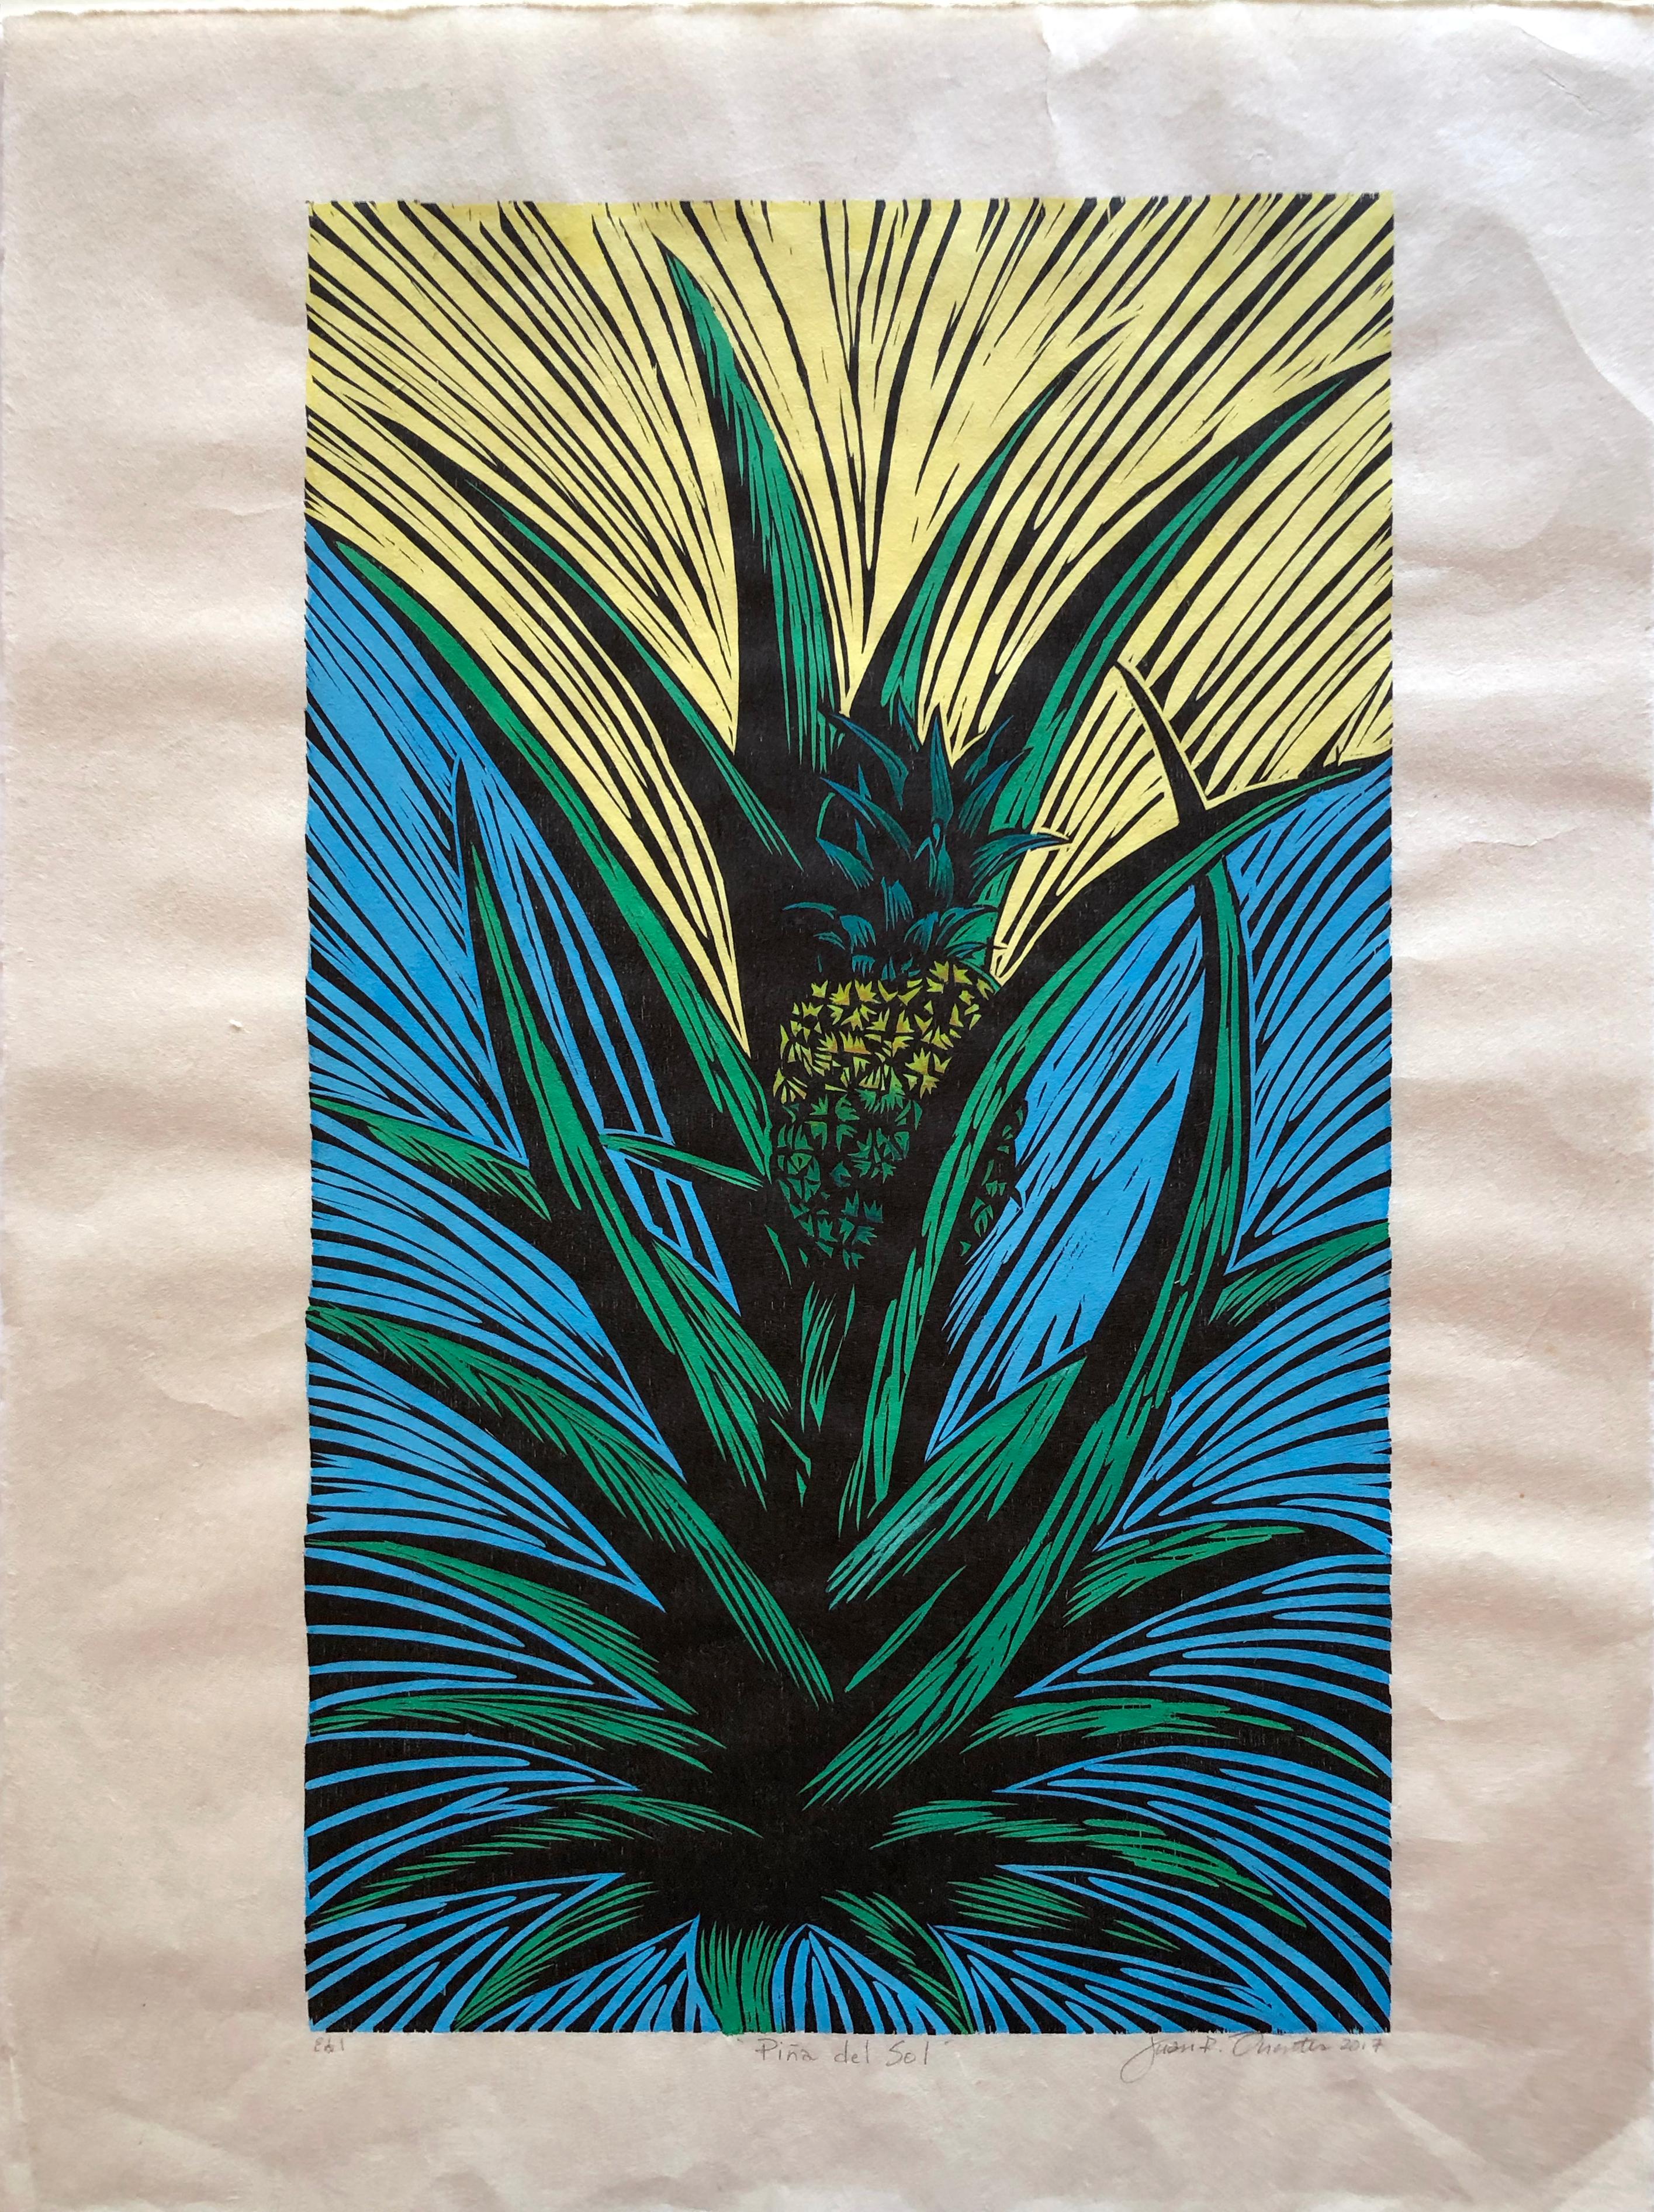 Pina del Sol - Contemporary Print by Juan Fuentes